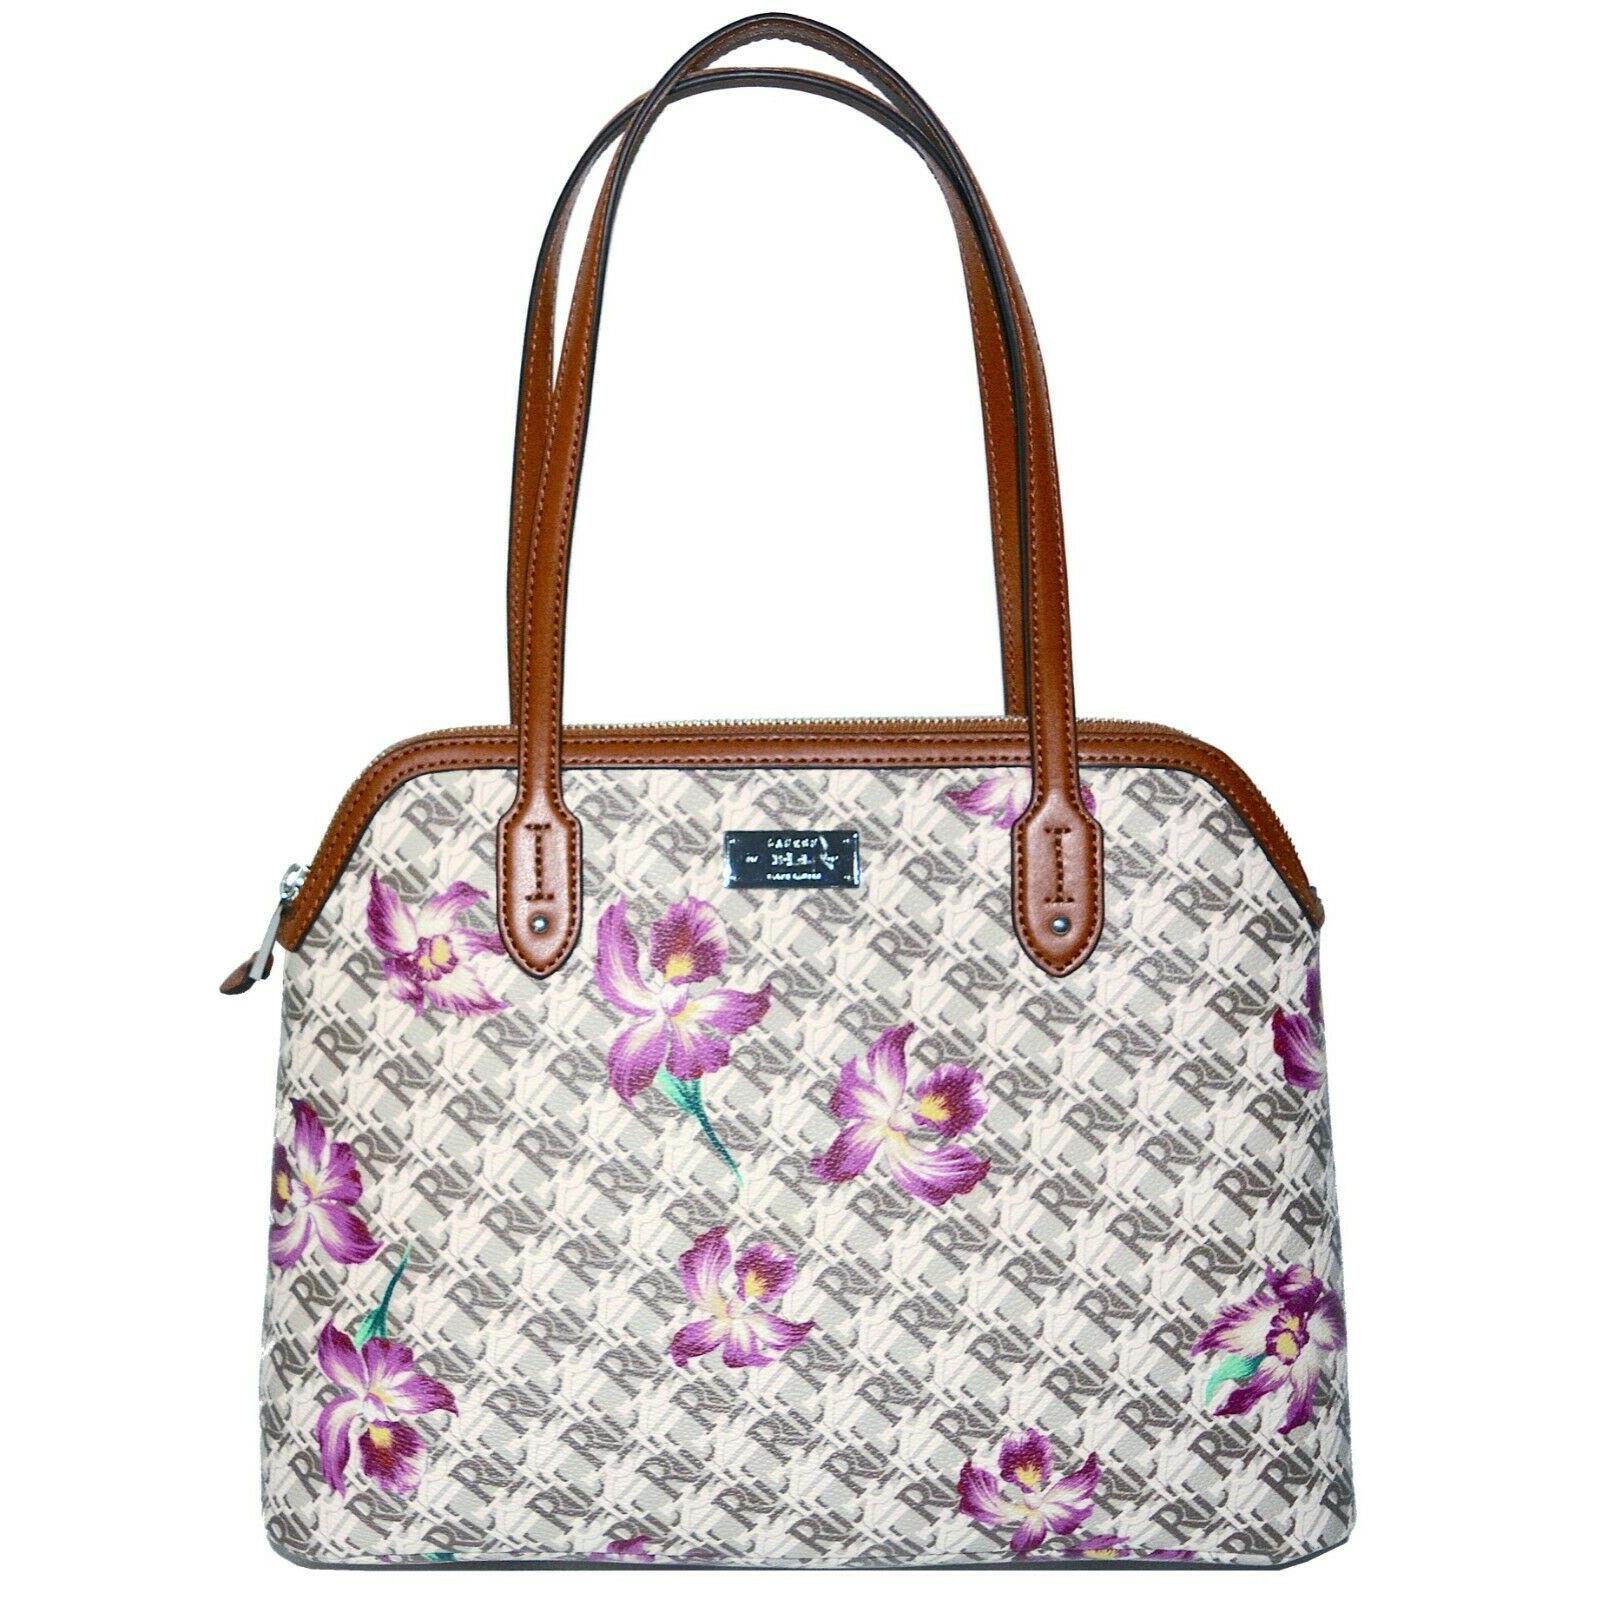 Ralph Lauren Belknap Dome Satchel Handbag Shoulder Bag Purse Orchid